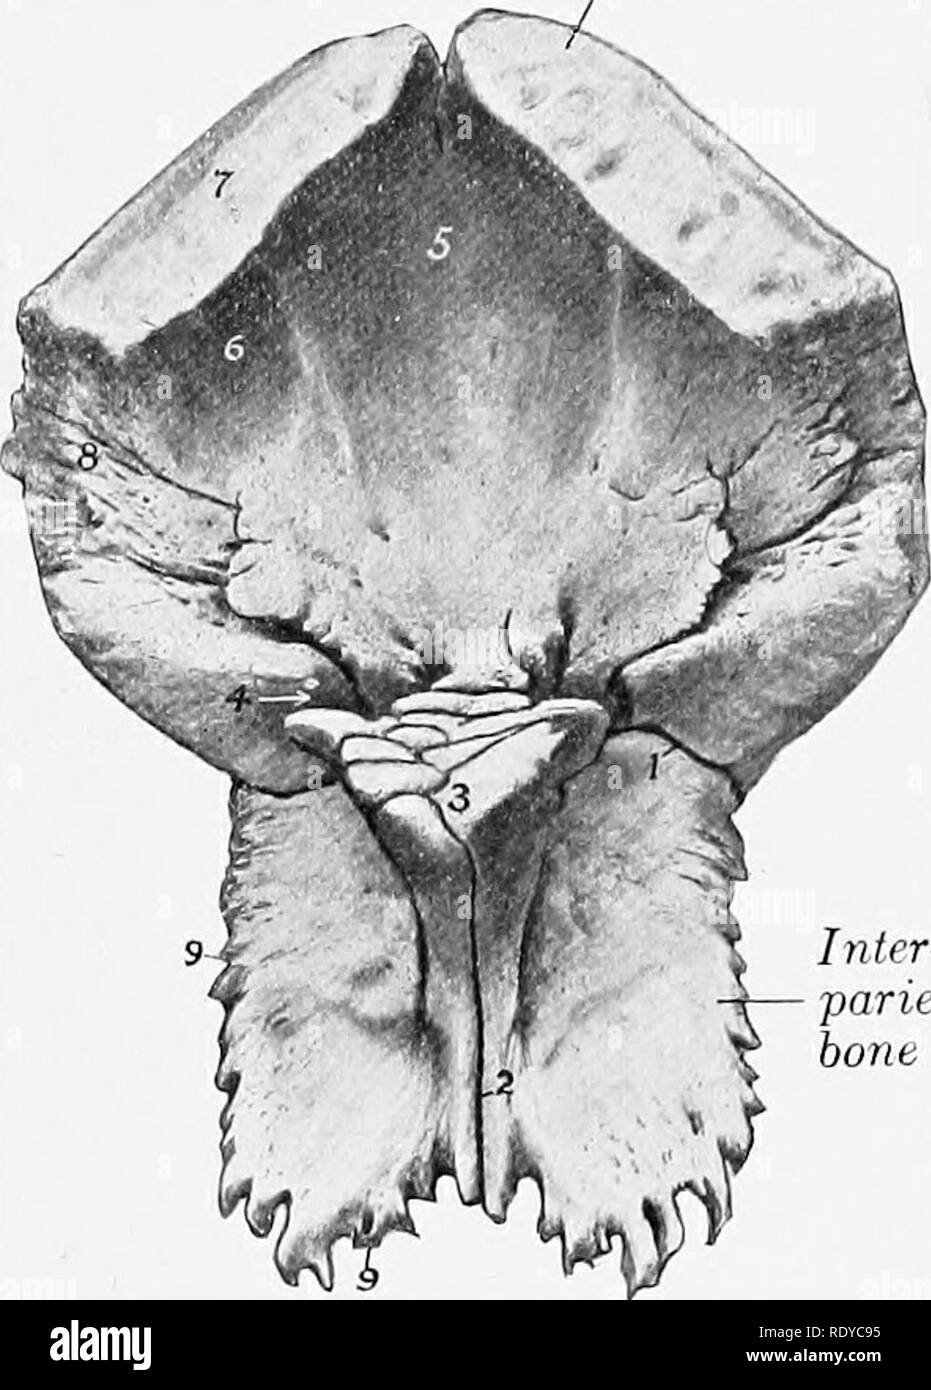 is the parietal bone a flat bone